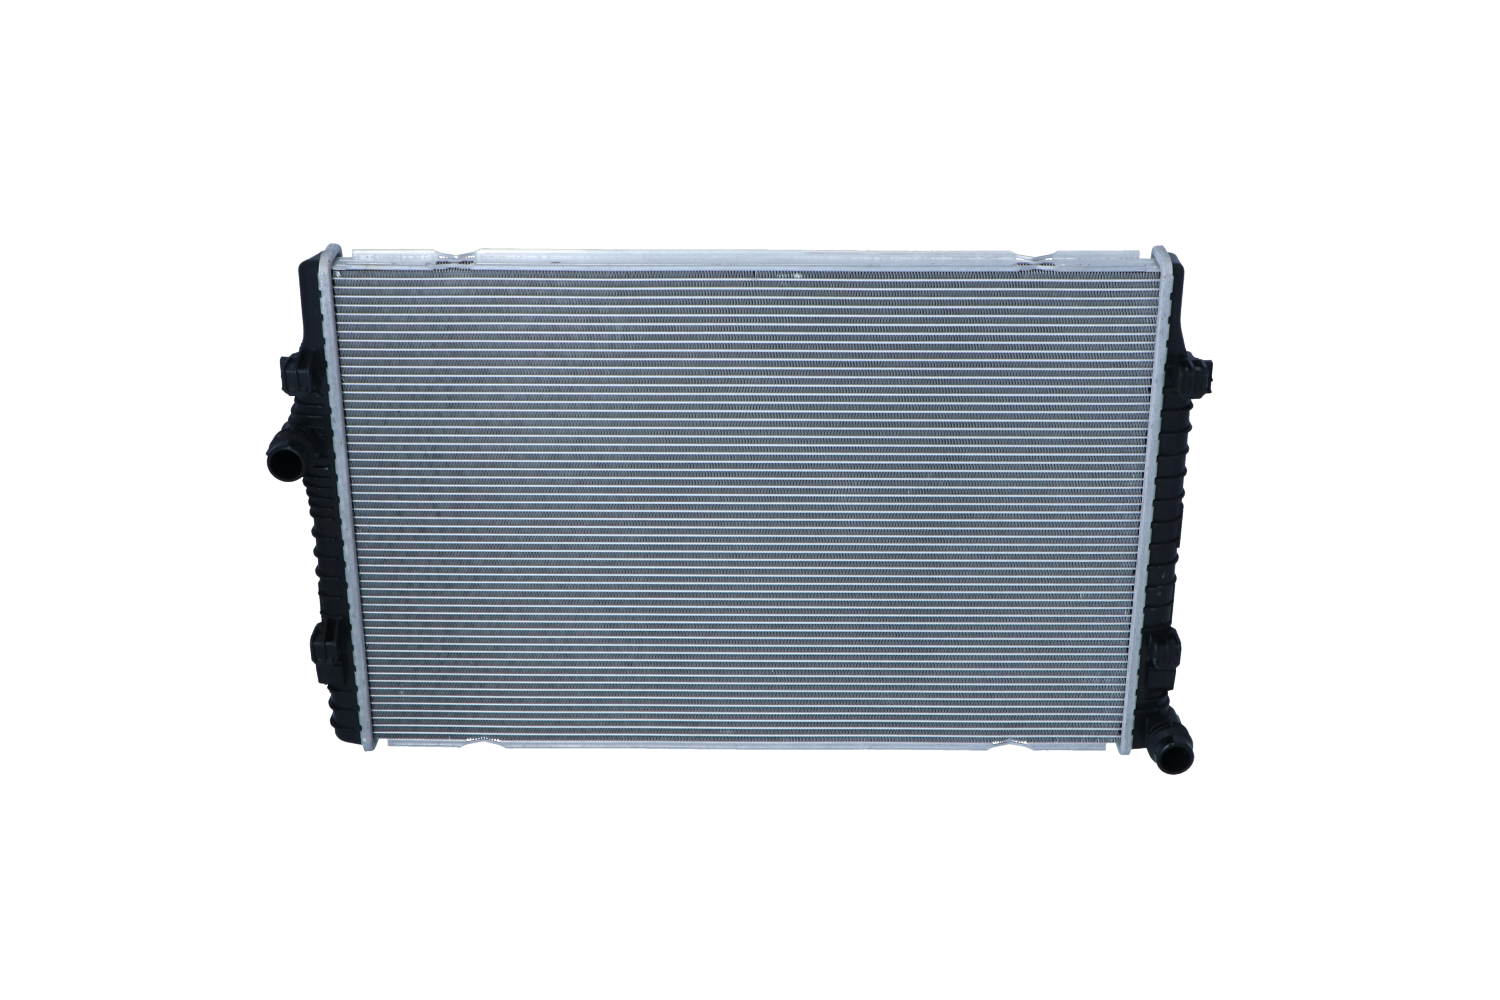 NRF 58437 Engine radiator Aluminium, 650 x 434 x 32 mm, Brazed cooling fins